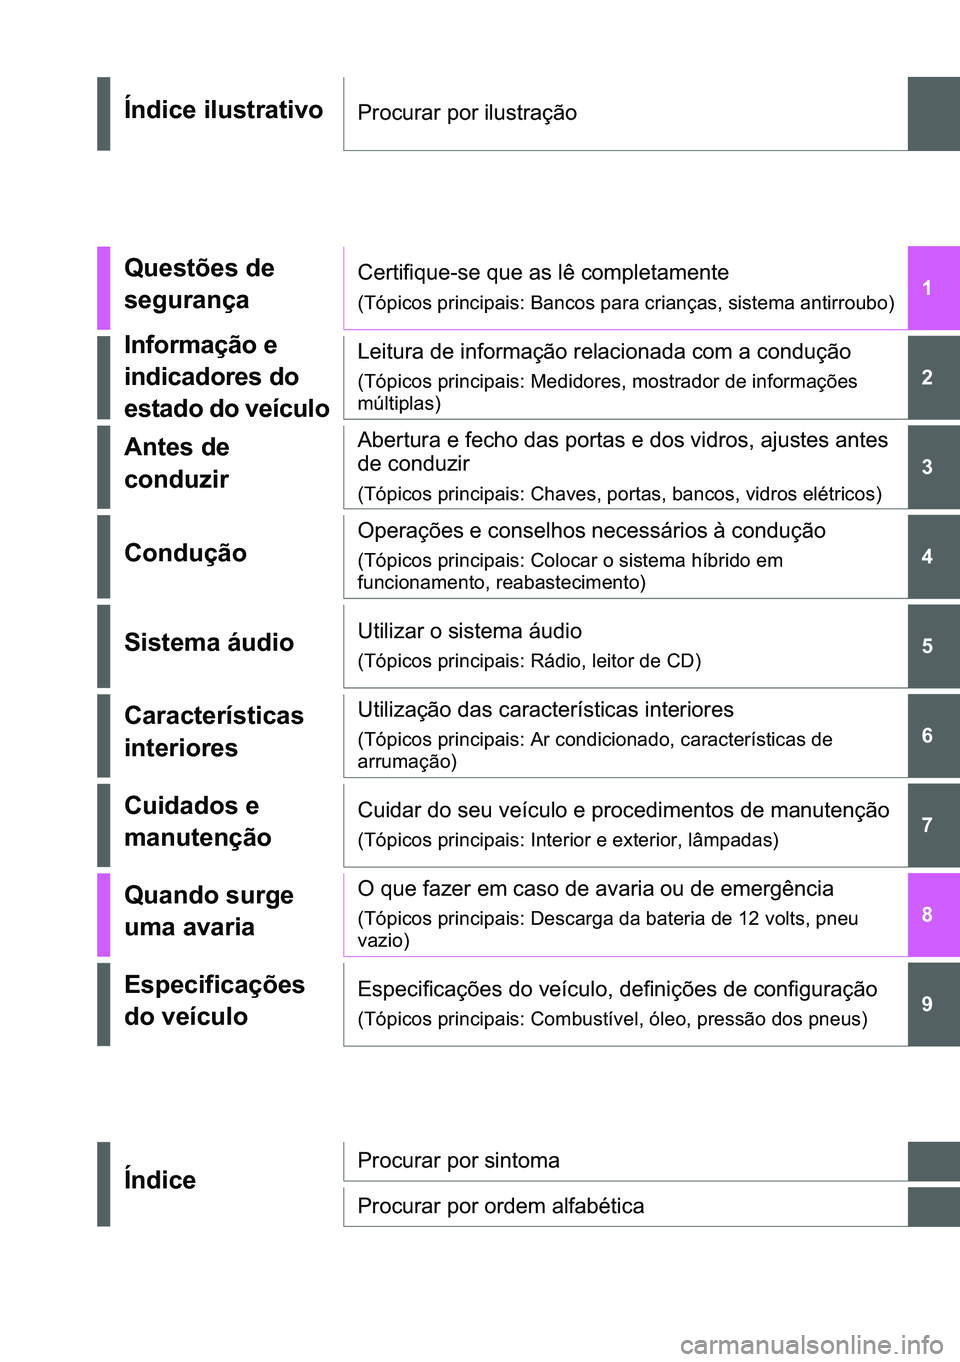 TOYOTA COROLLA 2020  Manual de utilização (in Portuguese) �
� � � � �
� �
�
�&�2�5�2�/�/�$ �+�9 �7�0�0�7 �(�(
�Ë�Q�G�L�F�H��L�O�X�V�W�U�D�W�L�Y�R�3�U�R�F�X�U�D�U��S�R�U��L�O�X�V�W�U�D�o�m�R
�4�X�H�V�W�}�H�V��G�H�
�V�H�J�X�U�D�Q�o�D�&�H�U�W�L�I